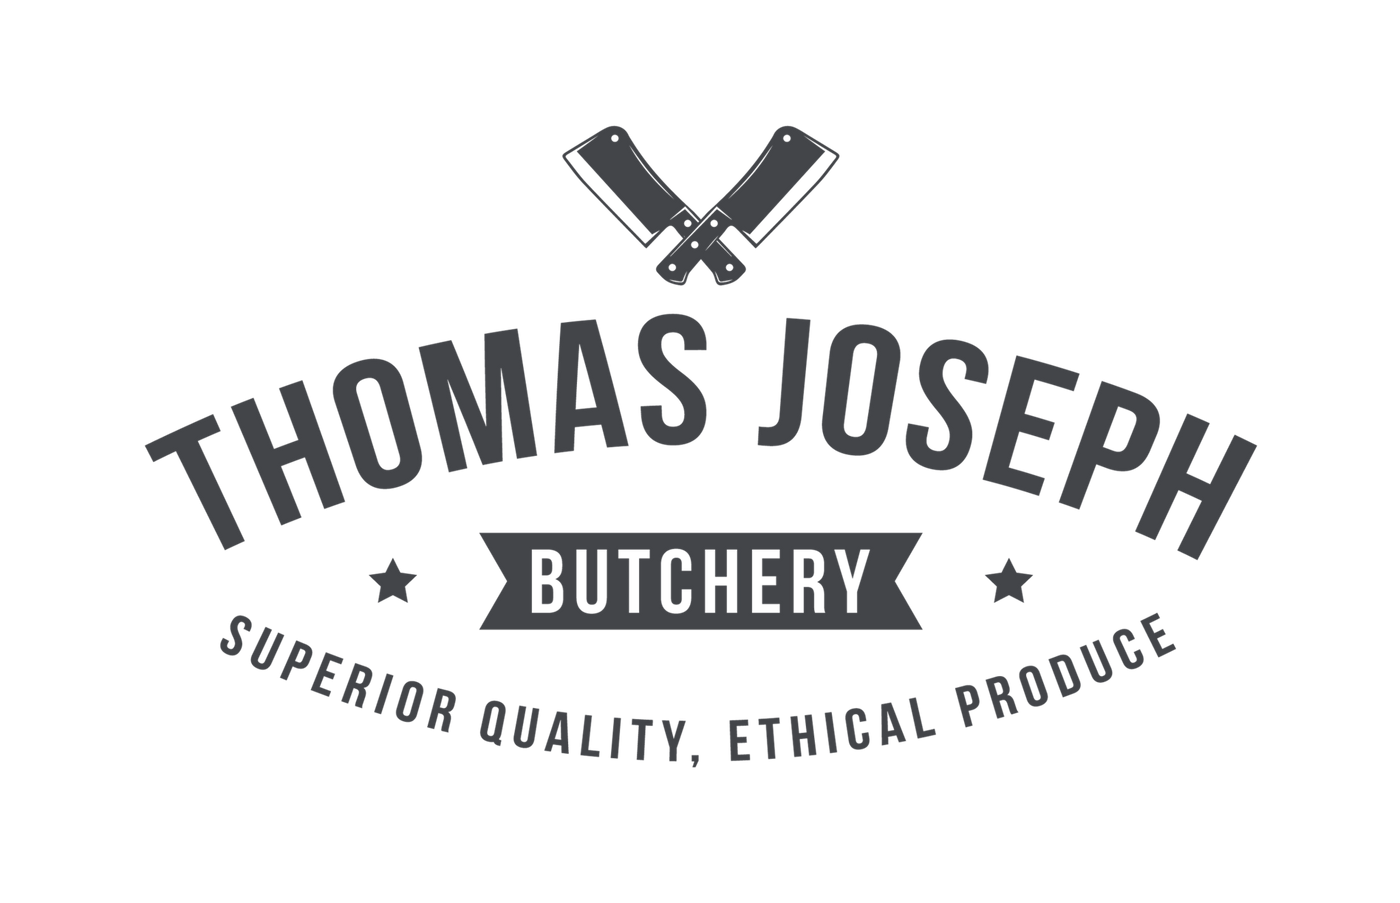 TJB Gift Card - Gift Cards - Thomas Joseph Butchery - Ethical Dry-Aged Meat The Best Steak UK Thomas Joseph Butchery